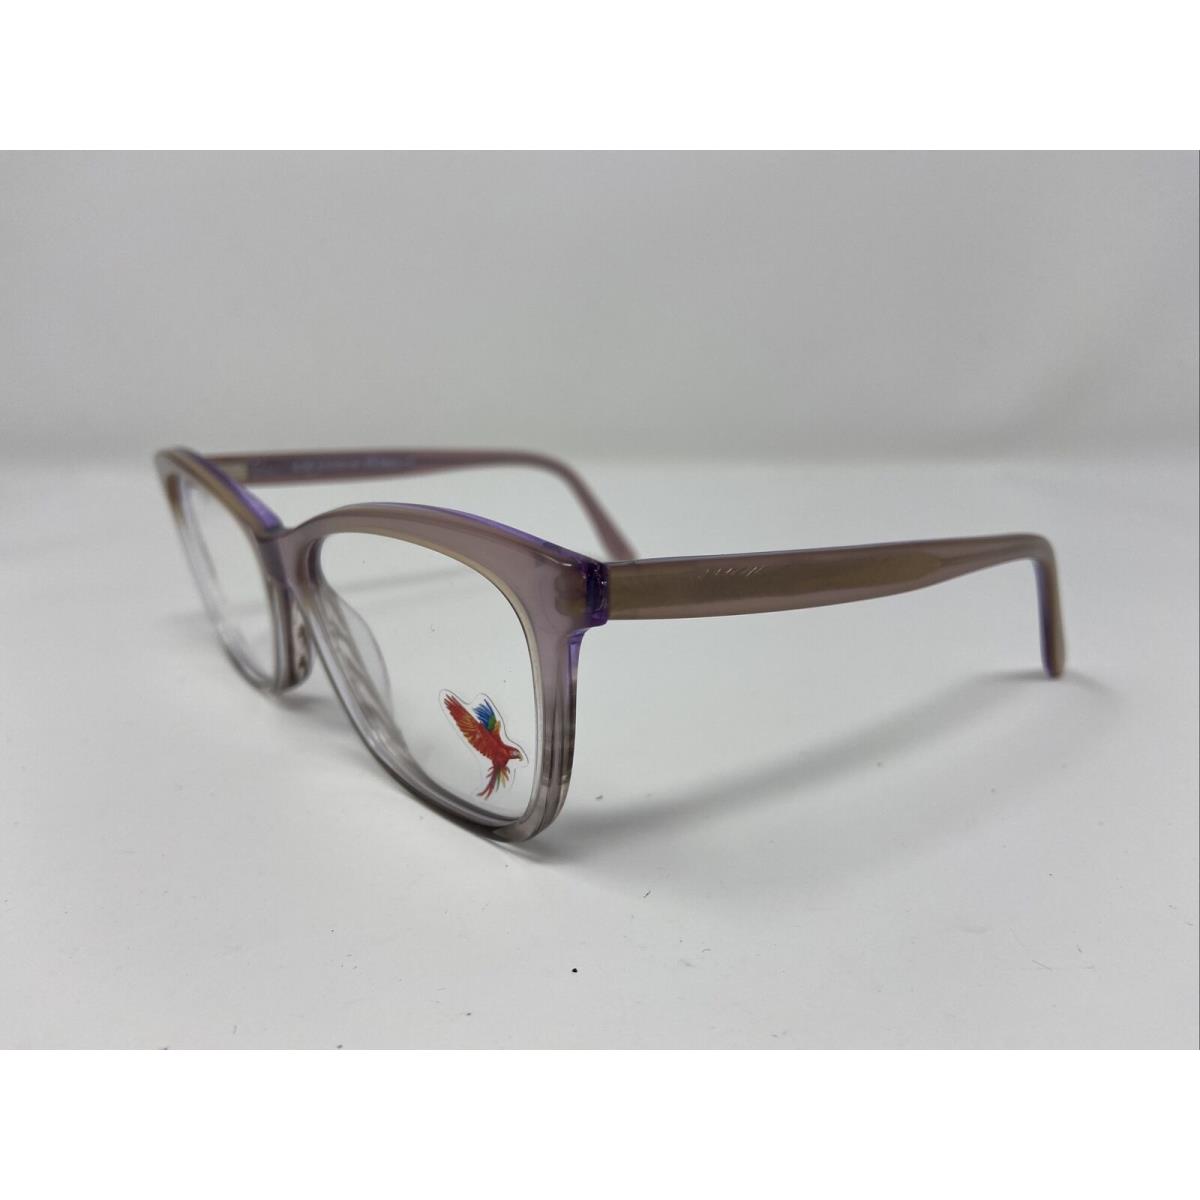 Maui Jim eyeglasses  - Beige Frame 0